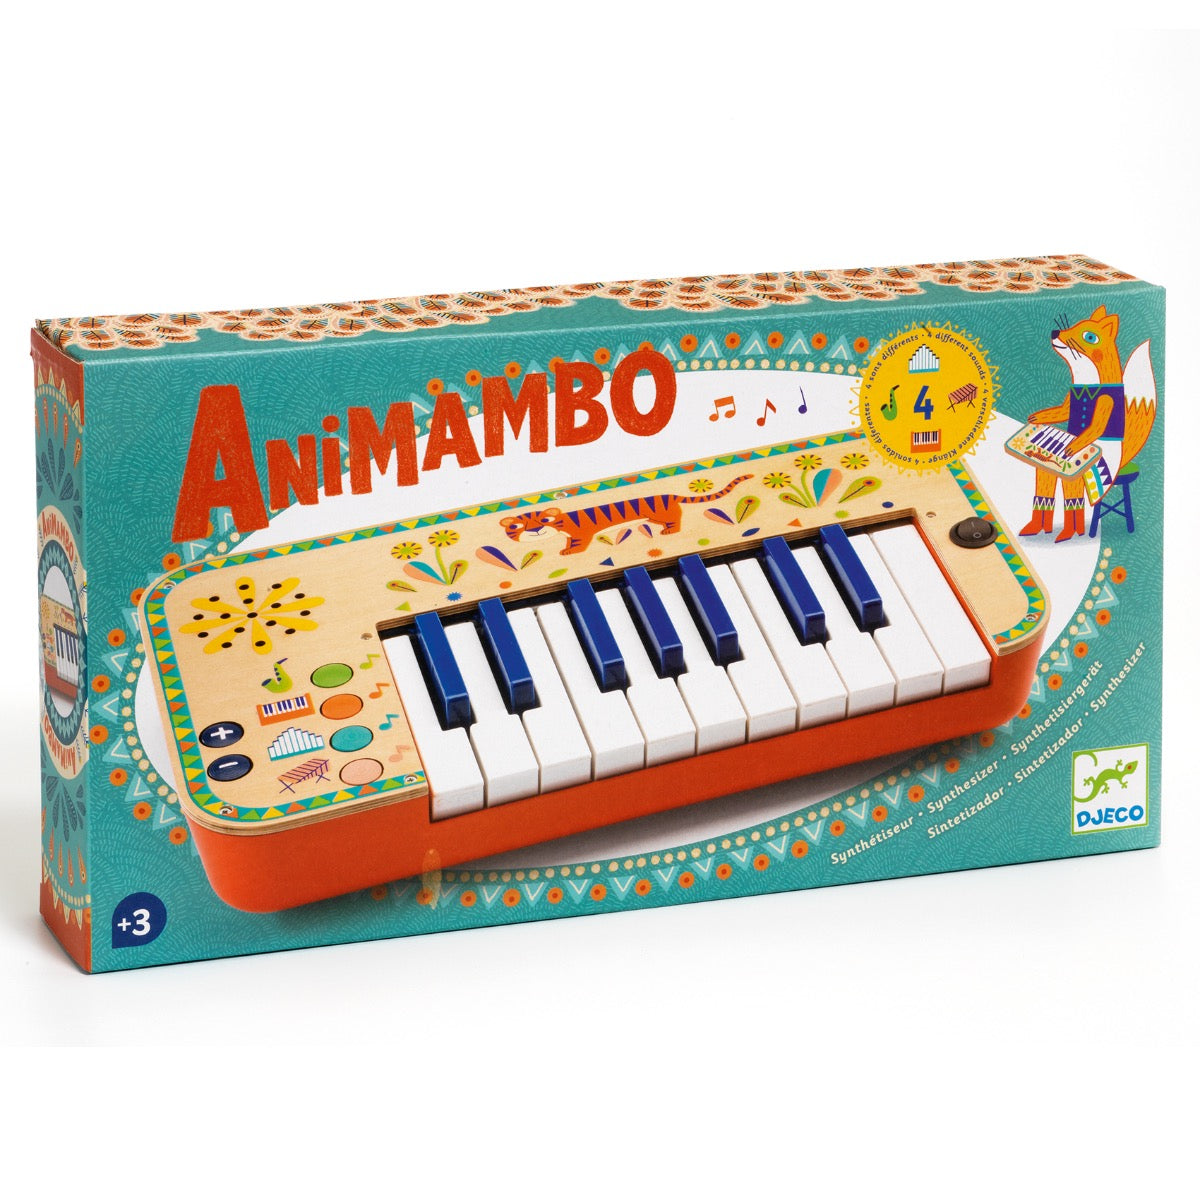 Djeco Animambo Synthesizer